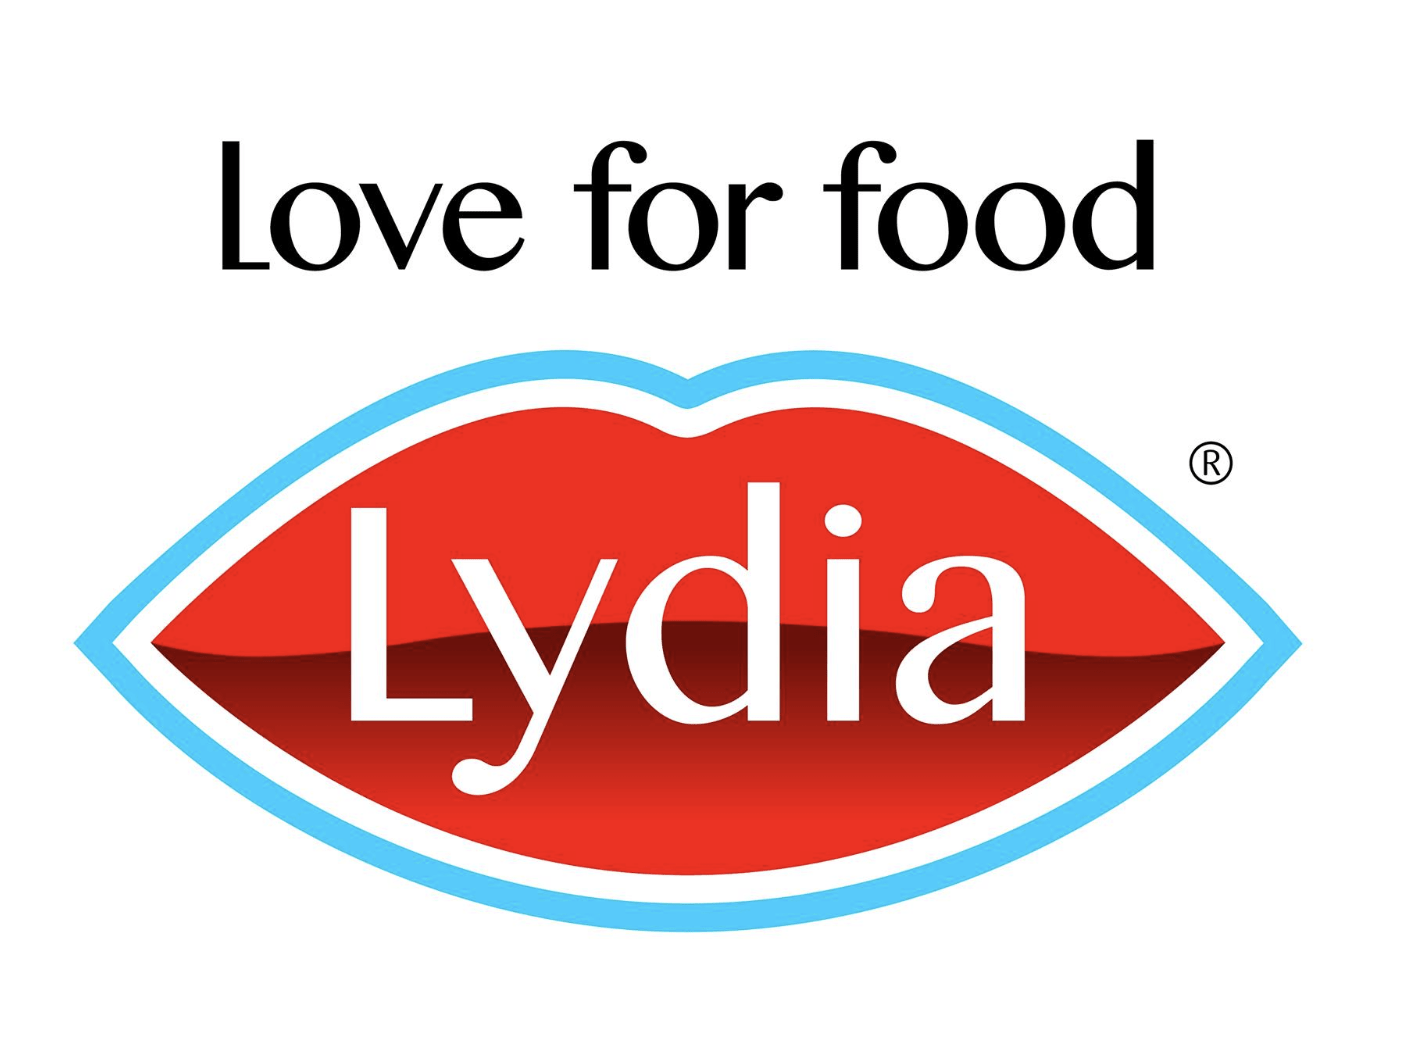 lydia food